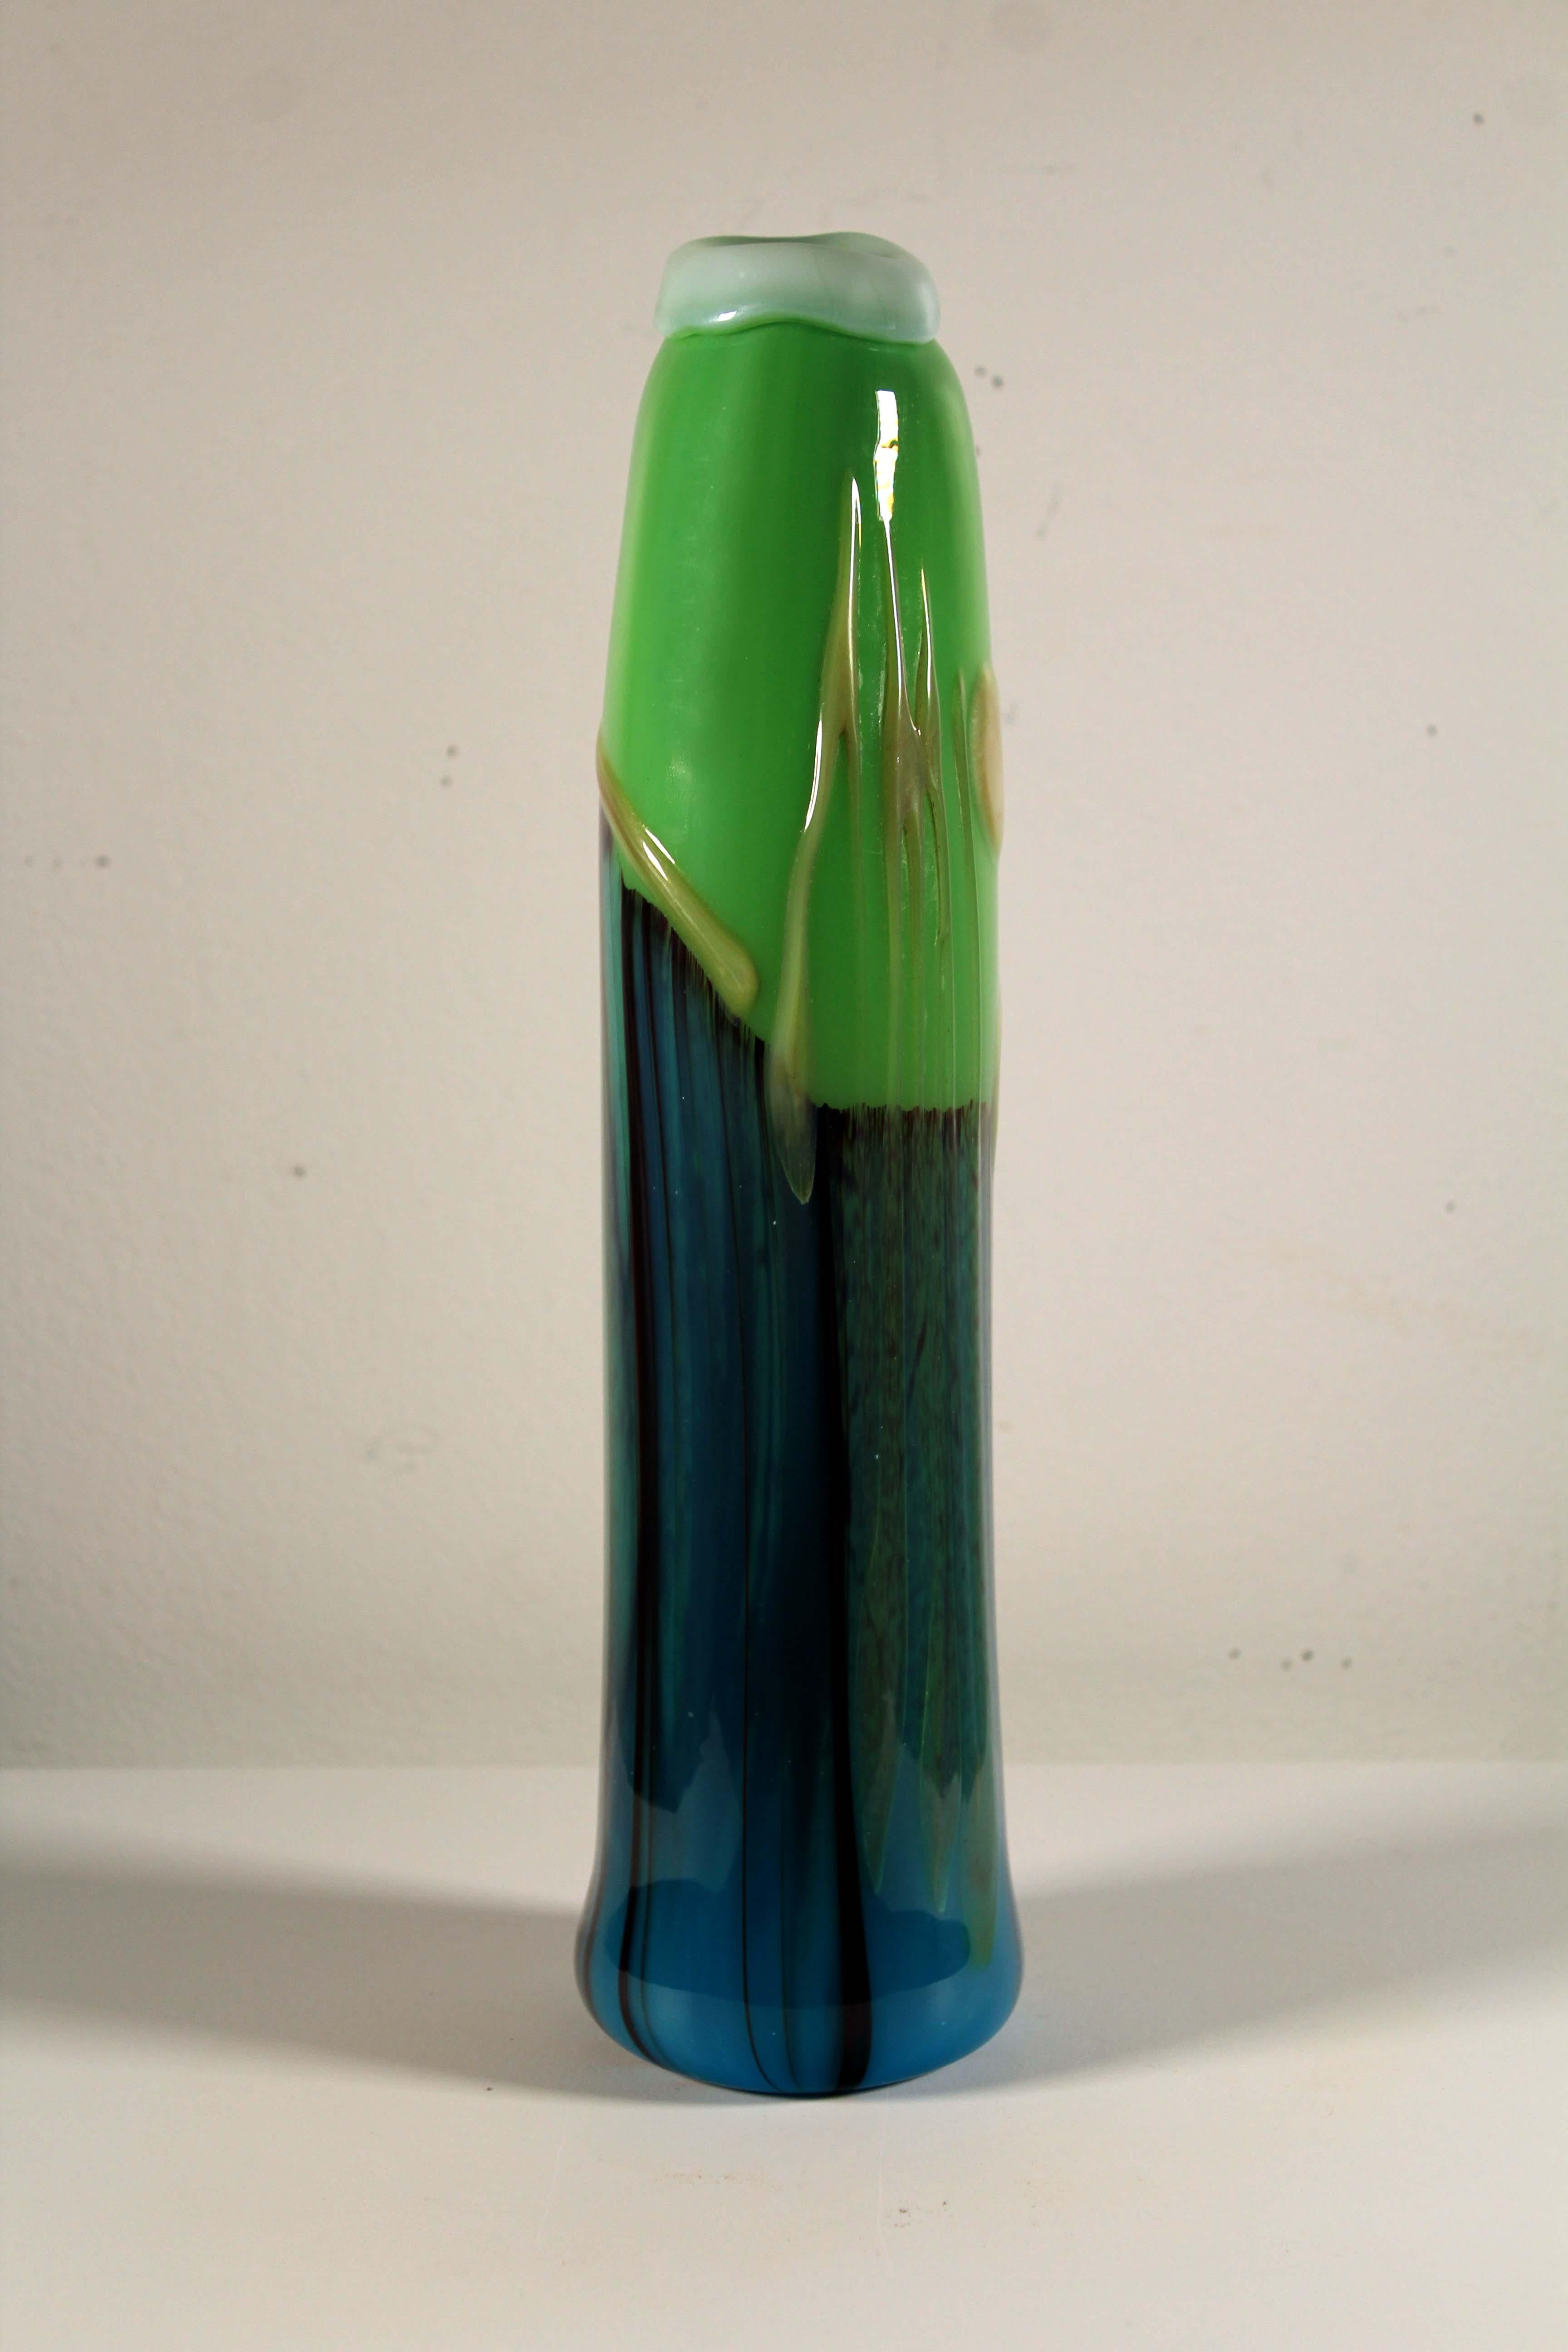 Jack Schmidt Postmodern Studio Handblown Glass Tall Green and Blue Vase, 1975 For Sale 5